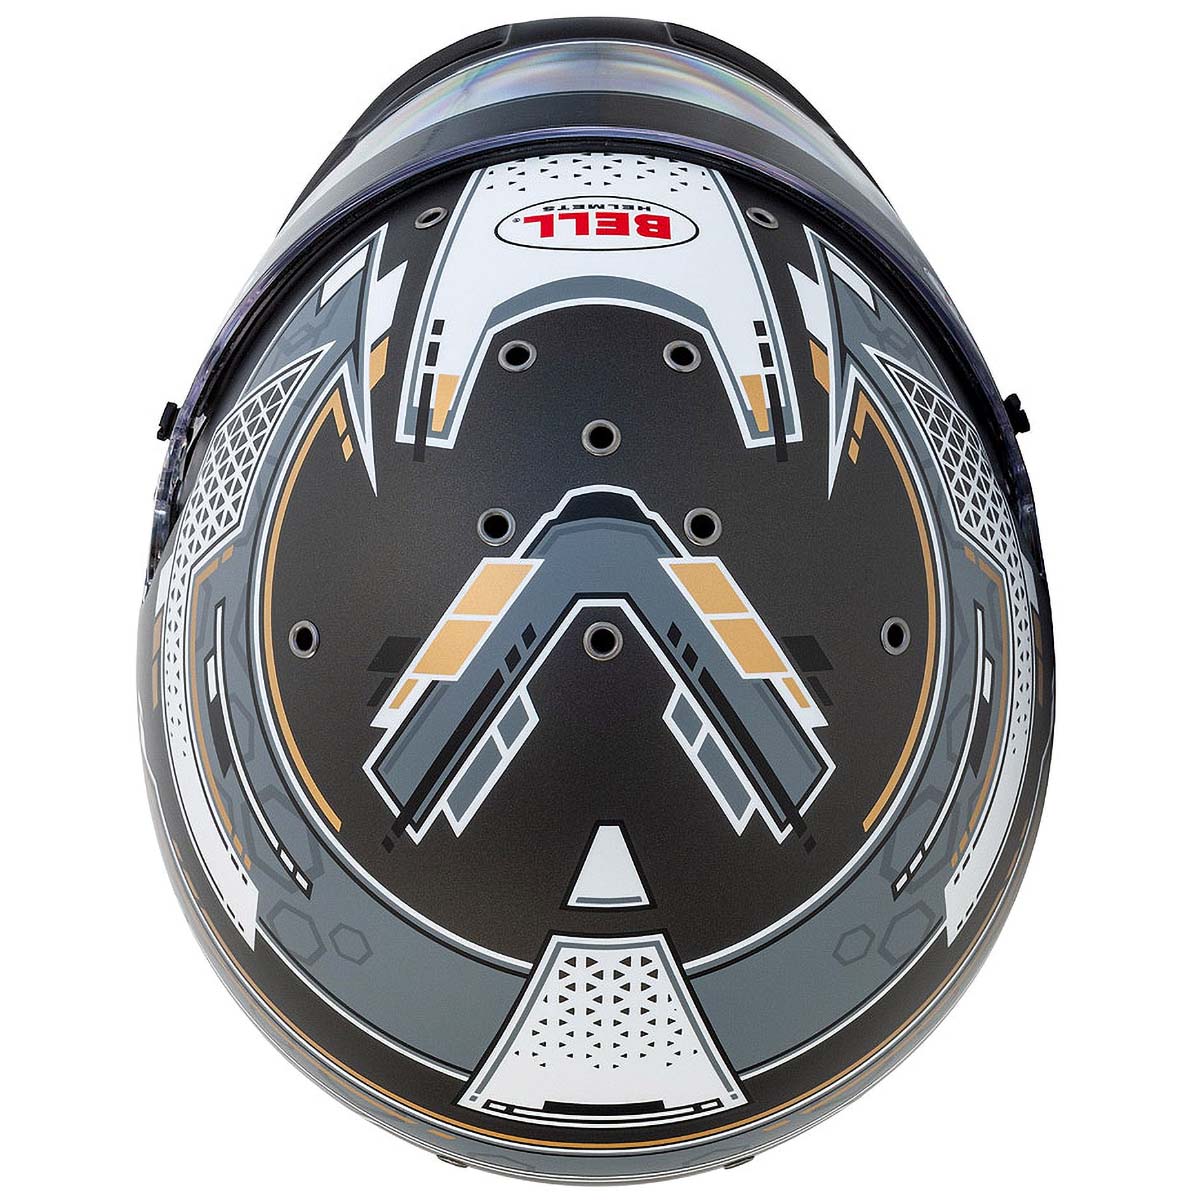 Bell RS7 Pro Helmet SA2020